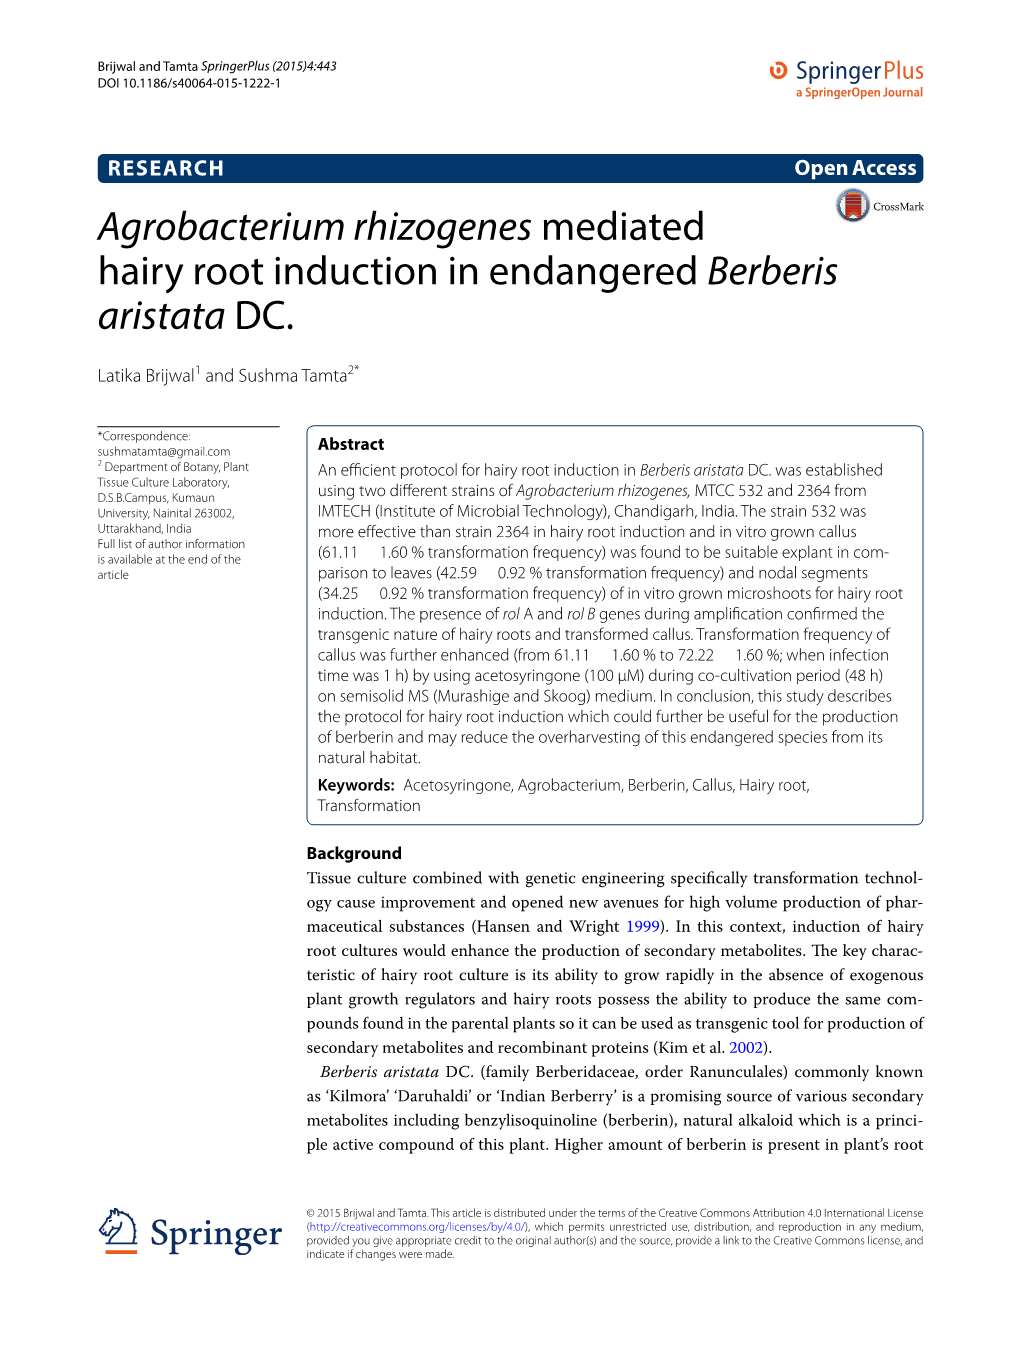 Agrobacterium Rhizogenes Mediated Hairy Root Induction in Endangered Berberis Aristata DC